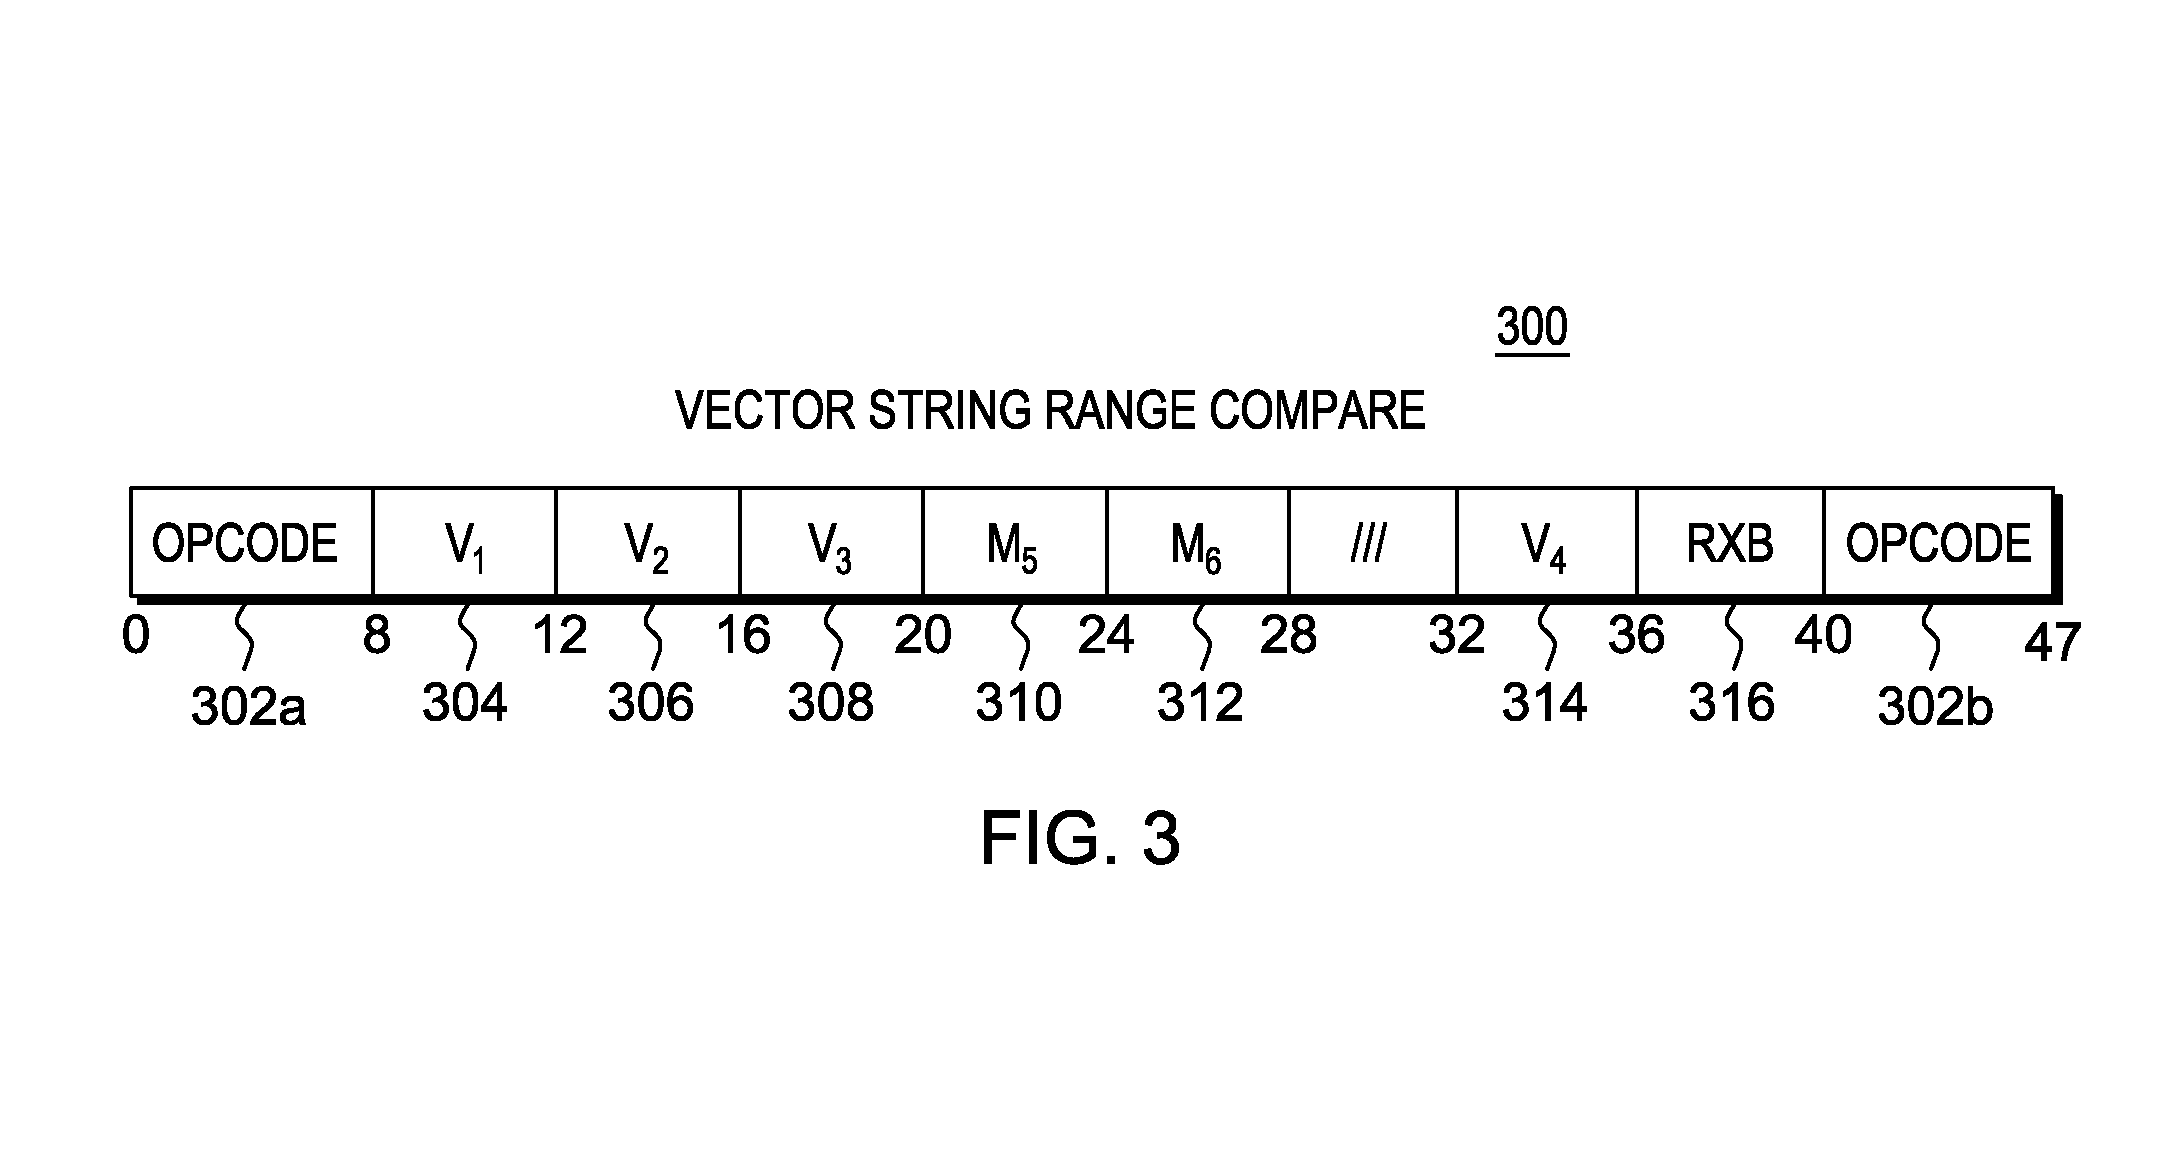 Vector string range compare